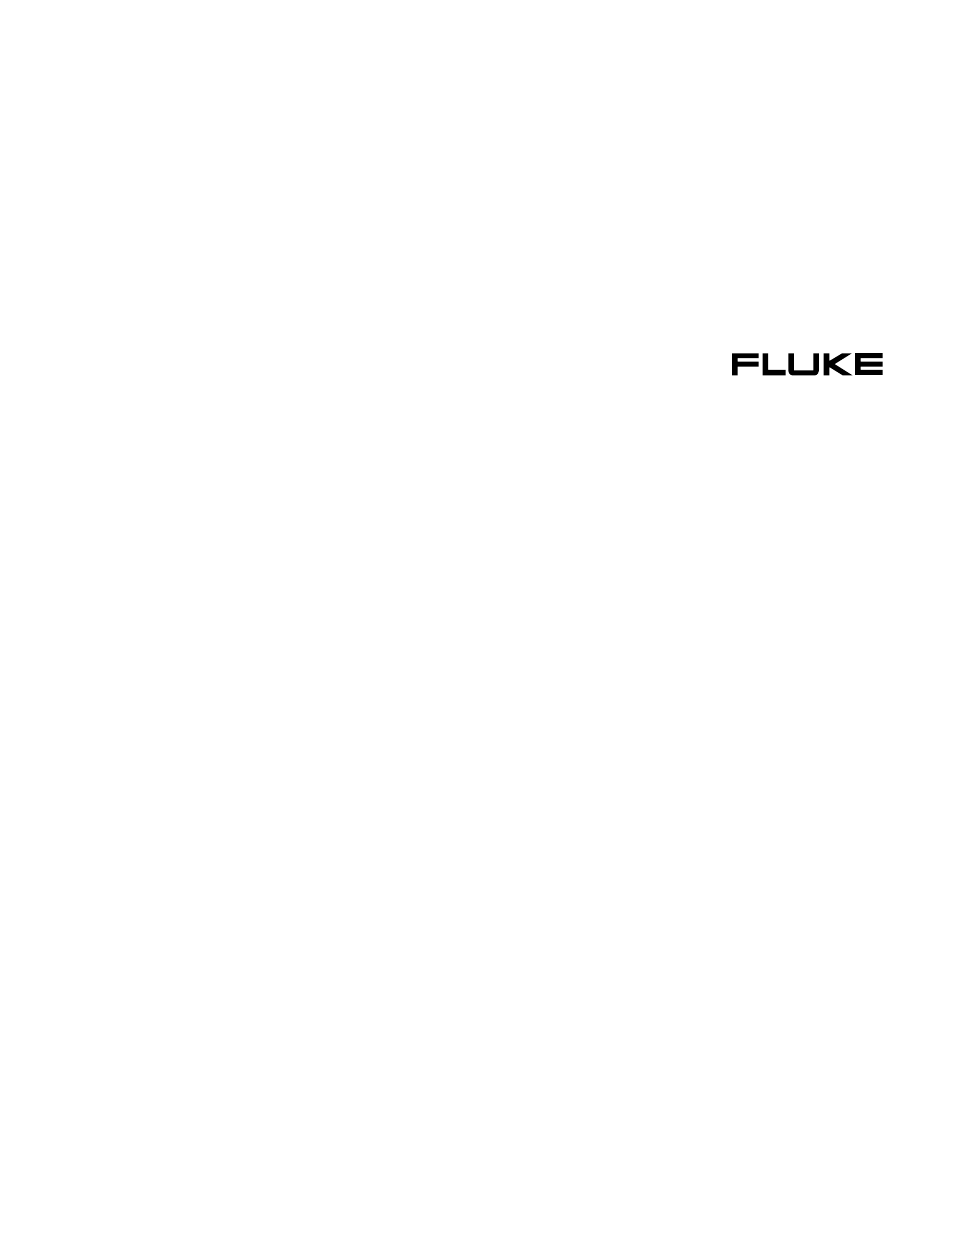 Fluke 189 User Manual | 96 pages